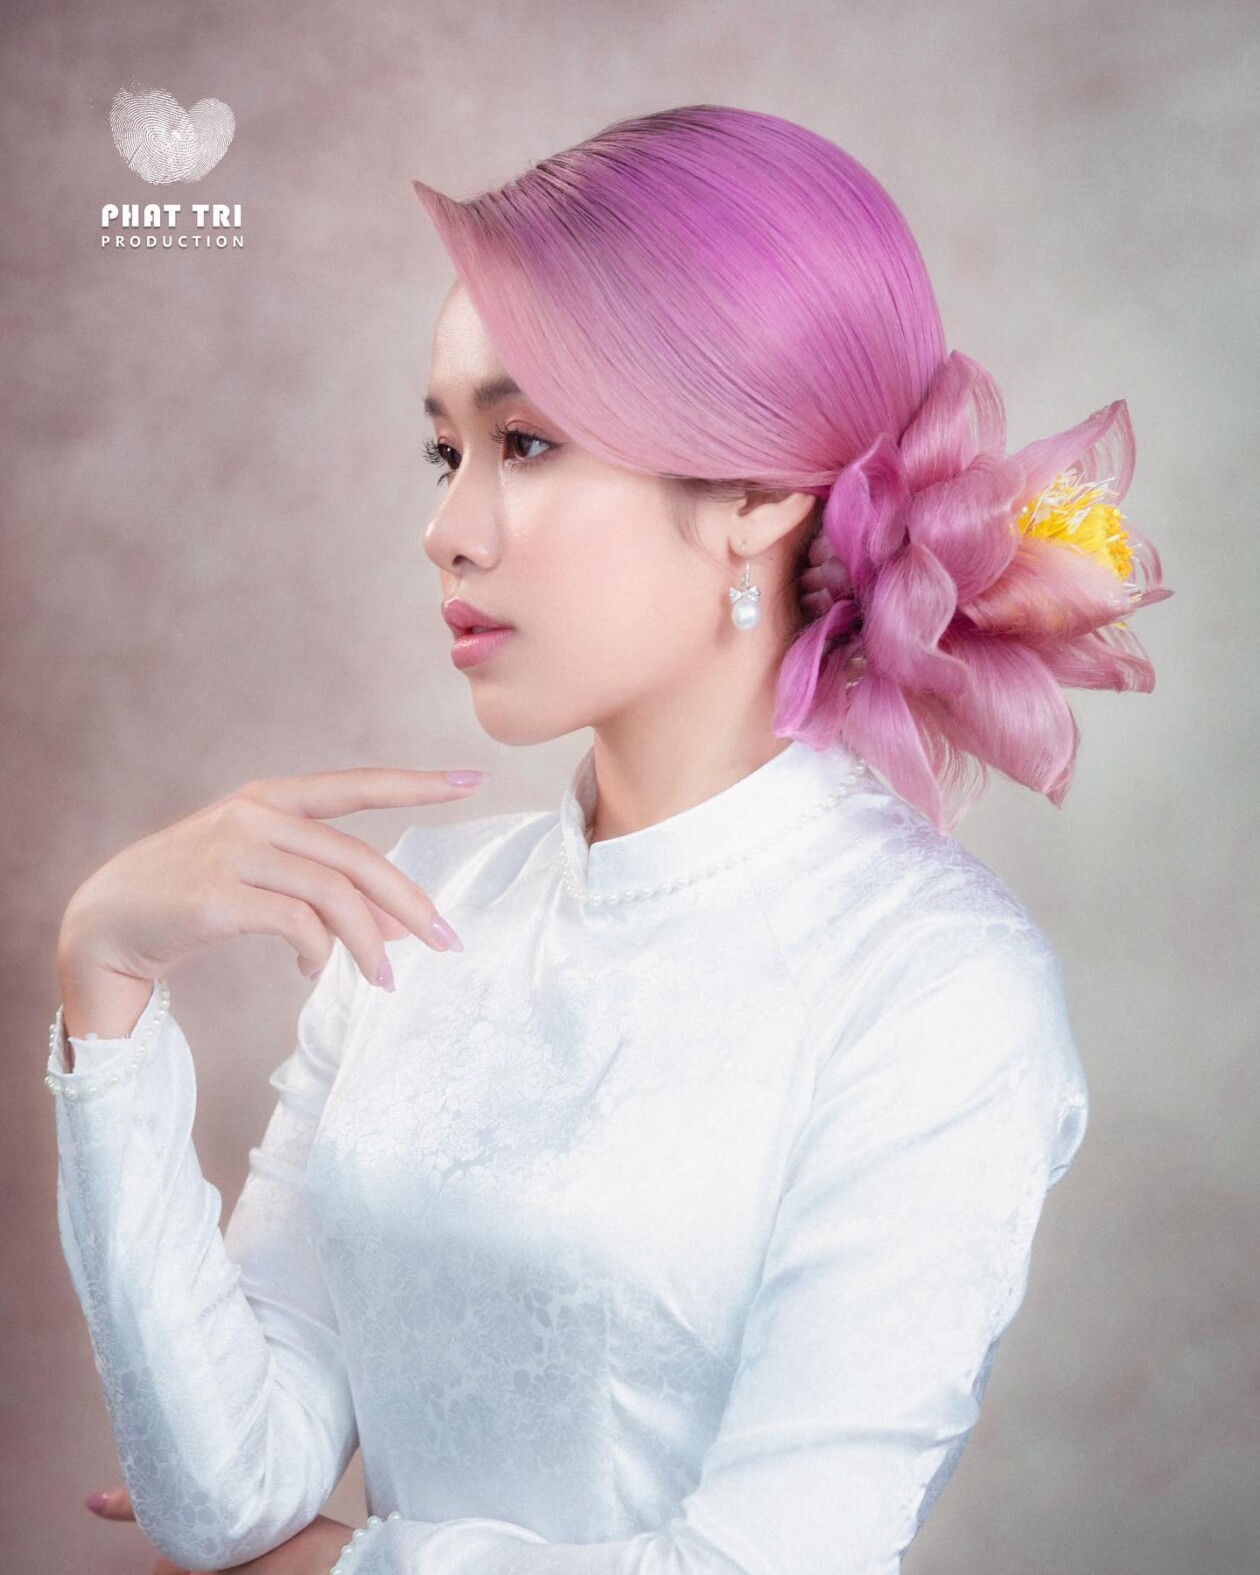 Beautiful Hairstyles That Look Like Ornate Flowers By Nguyen Phat Tri (12)